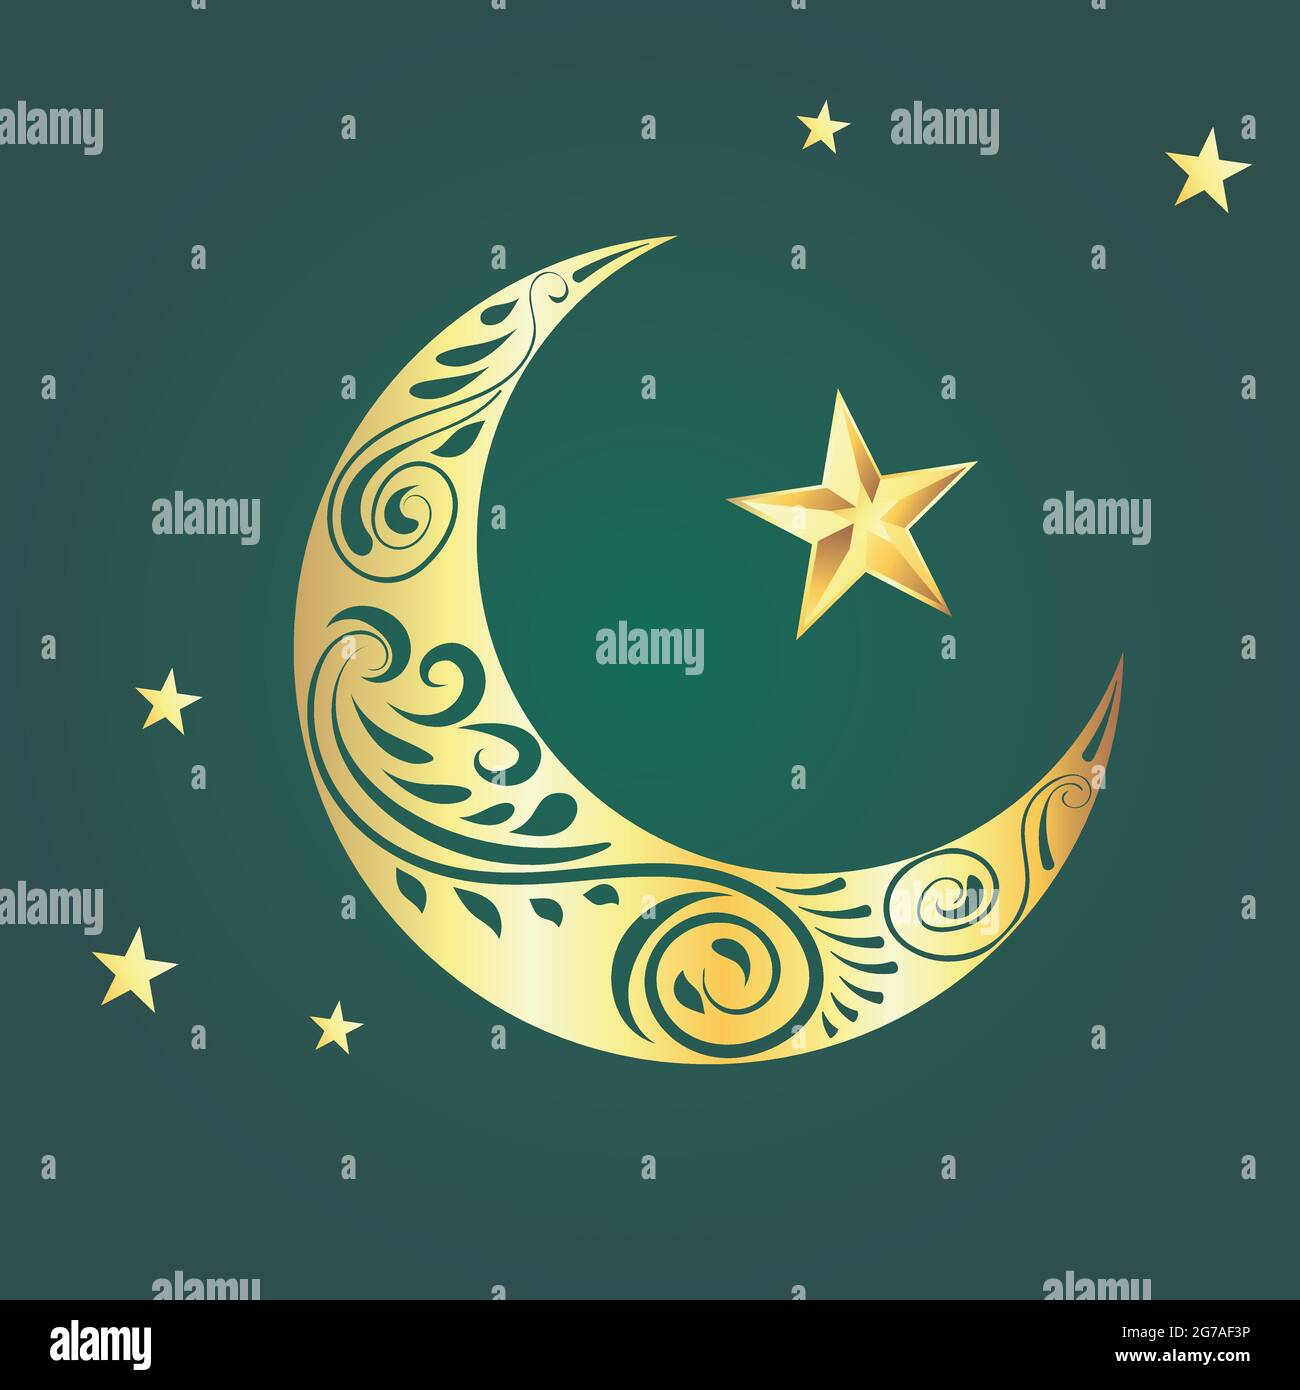 Decorative ornamental crescent moon and star design Stock Vector ...